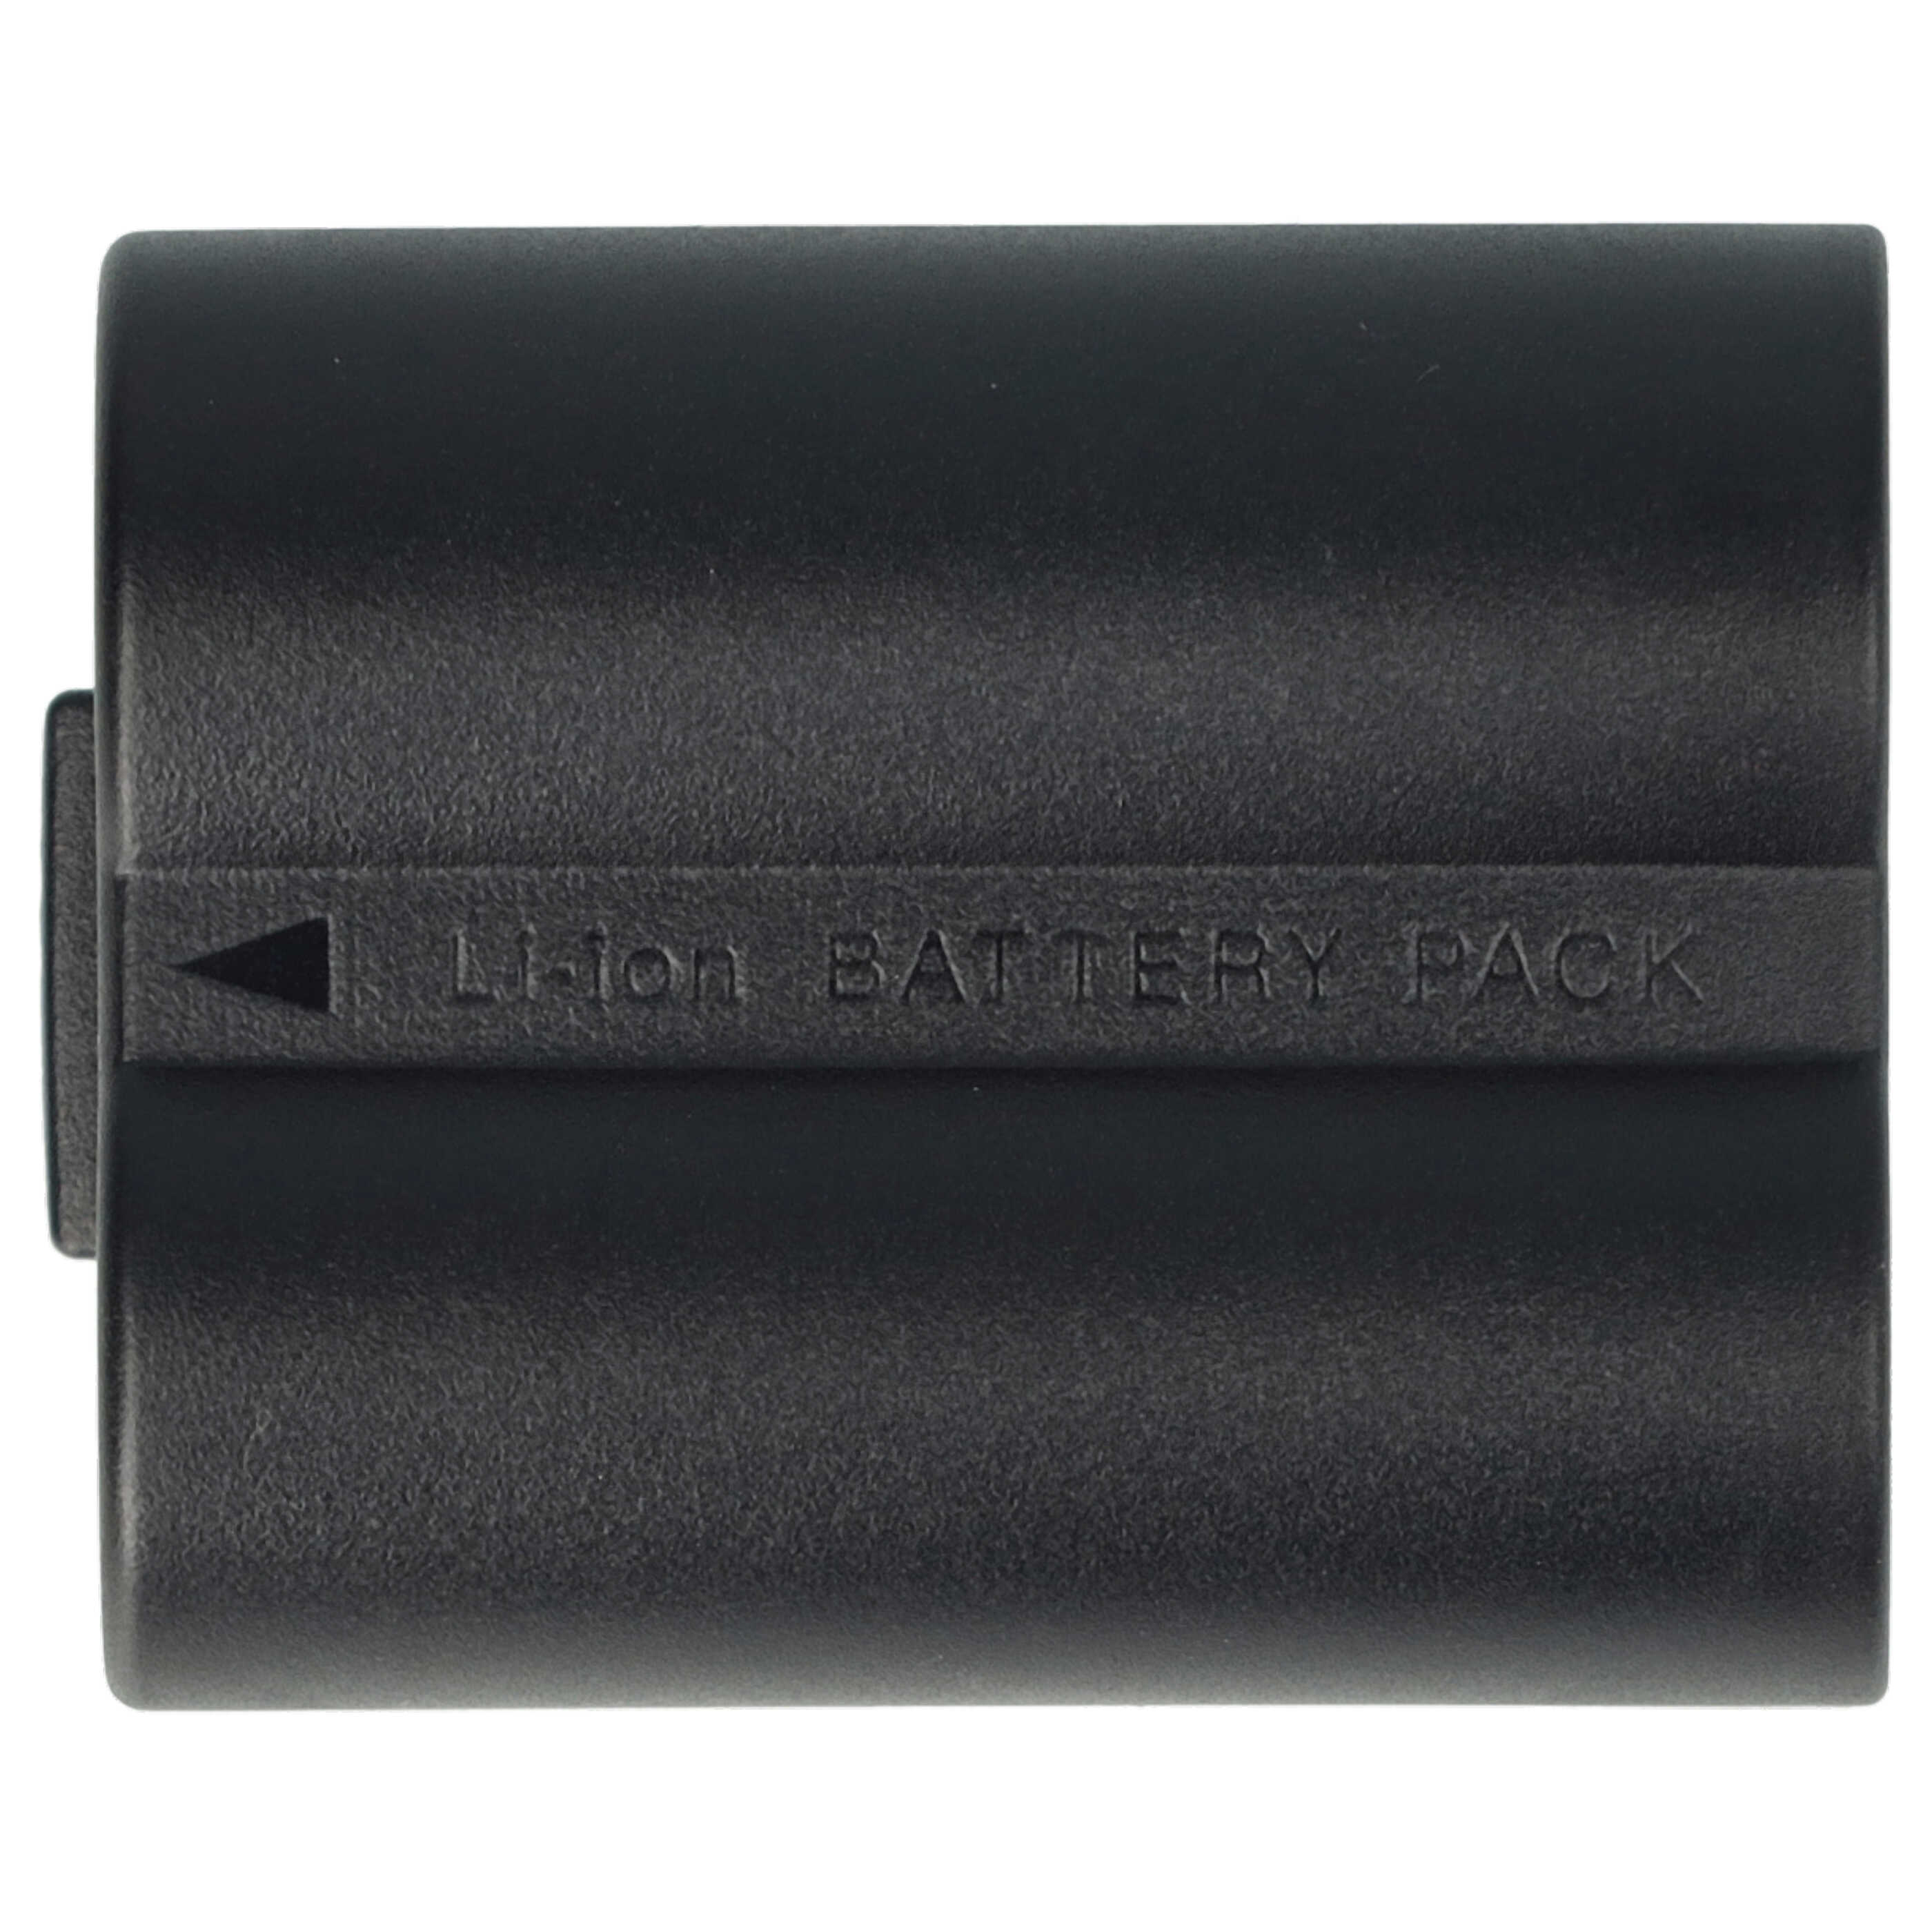 2x Akumulator do aparatu cyfrowego zamiennik Leica BP-DC5 - 600 mAh 7,2 V Li-Ion